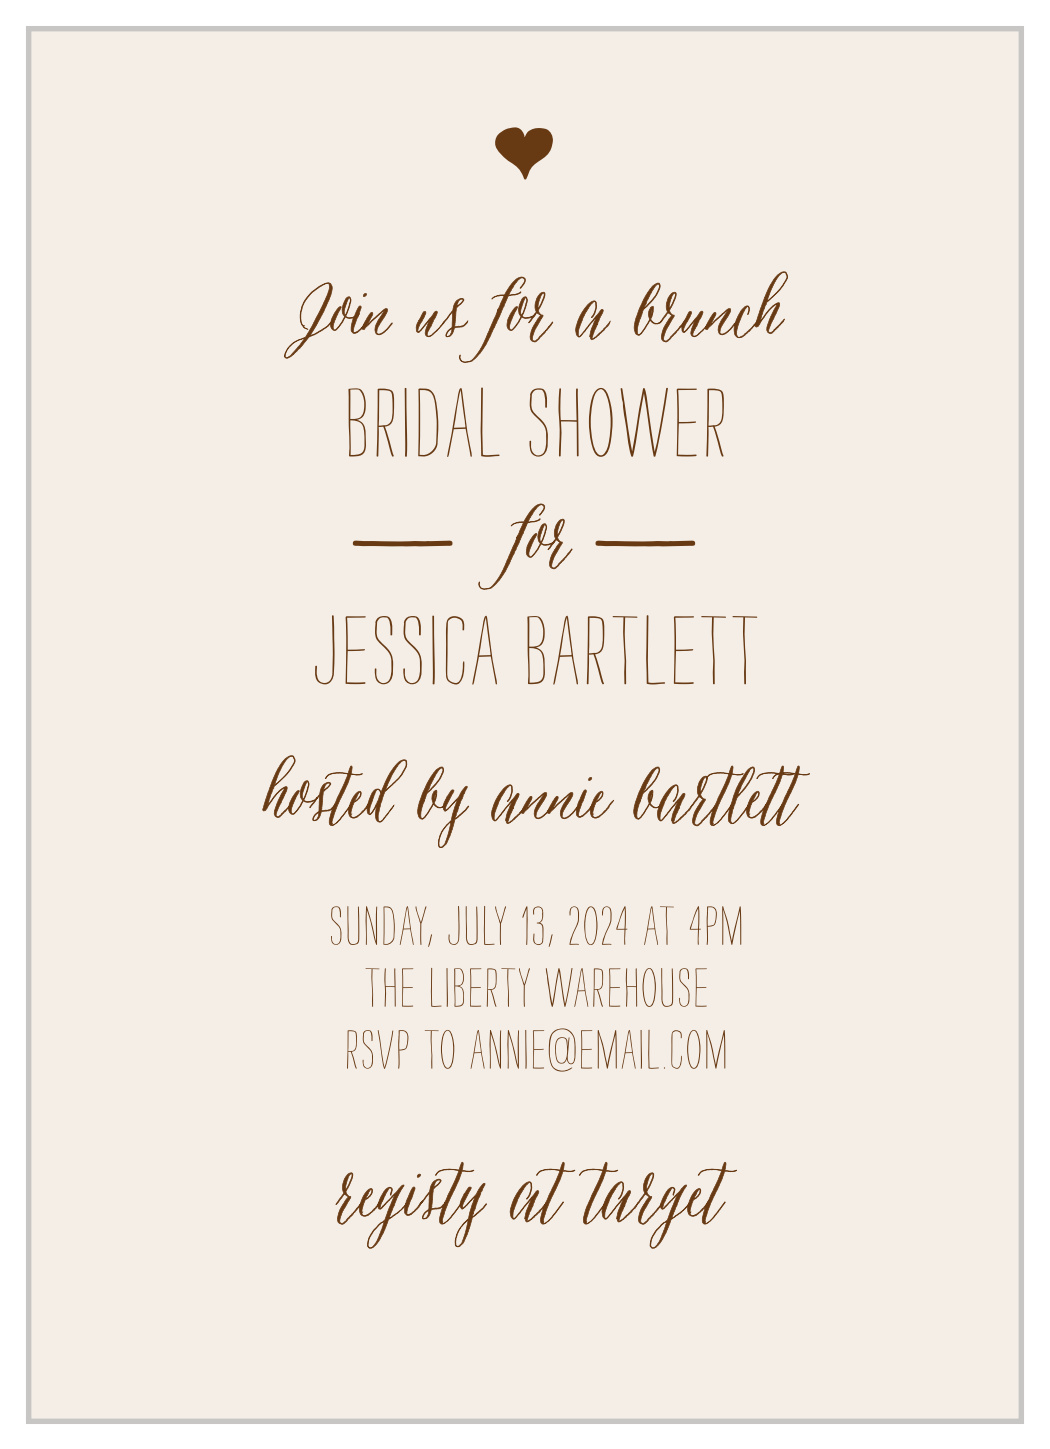 Drawn Together Bridal Shower Invitations